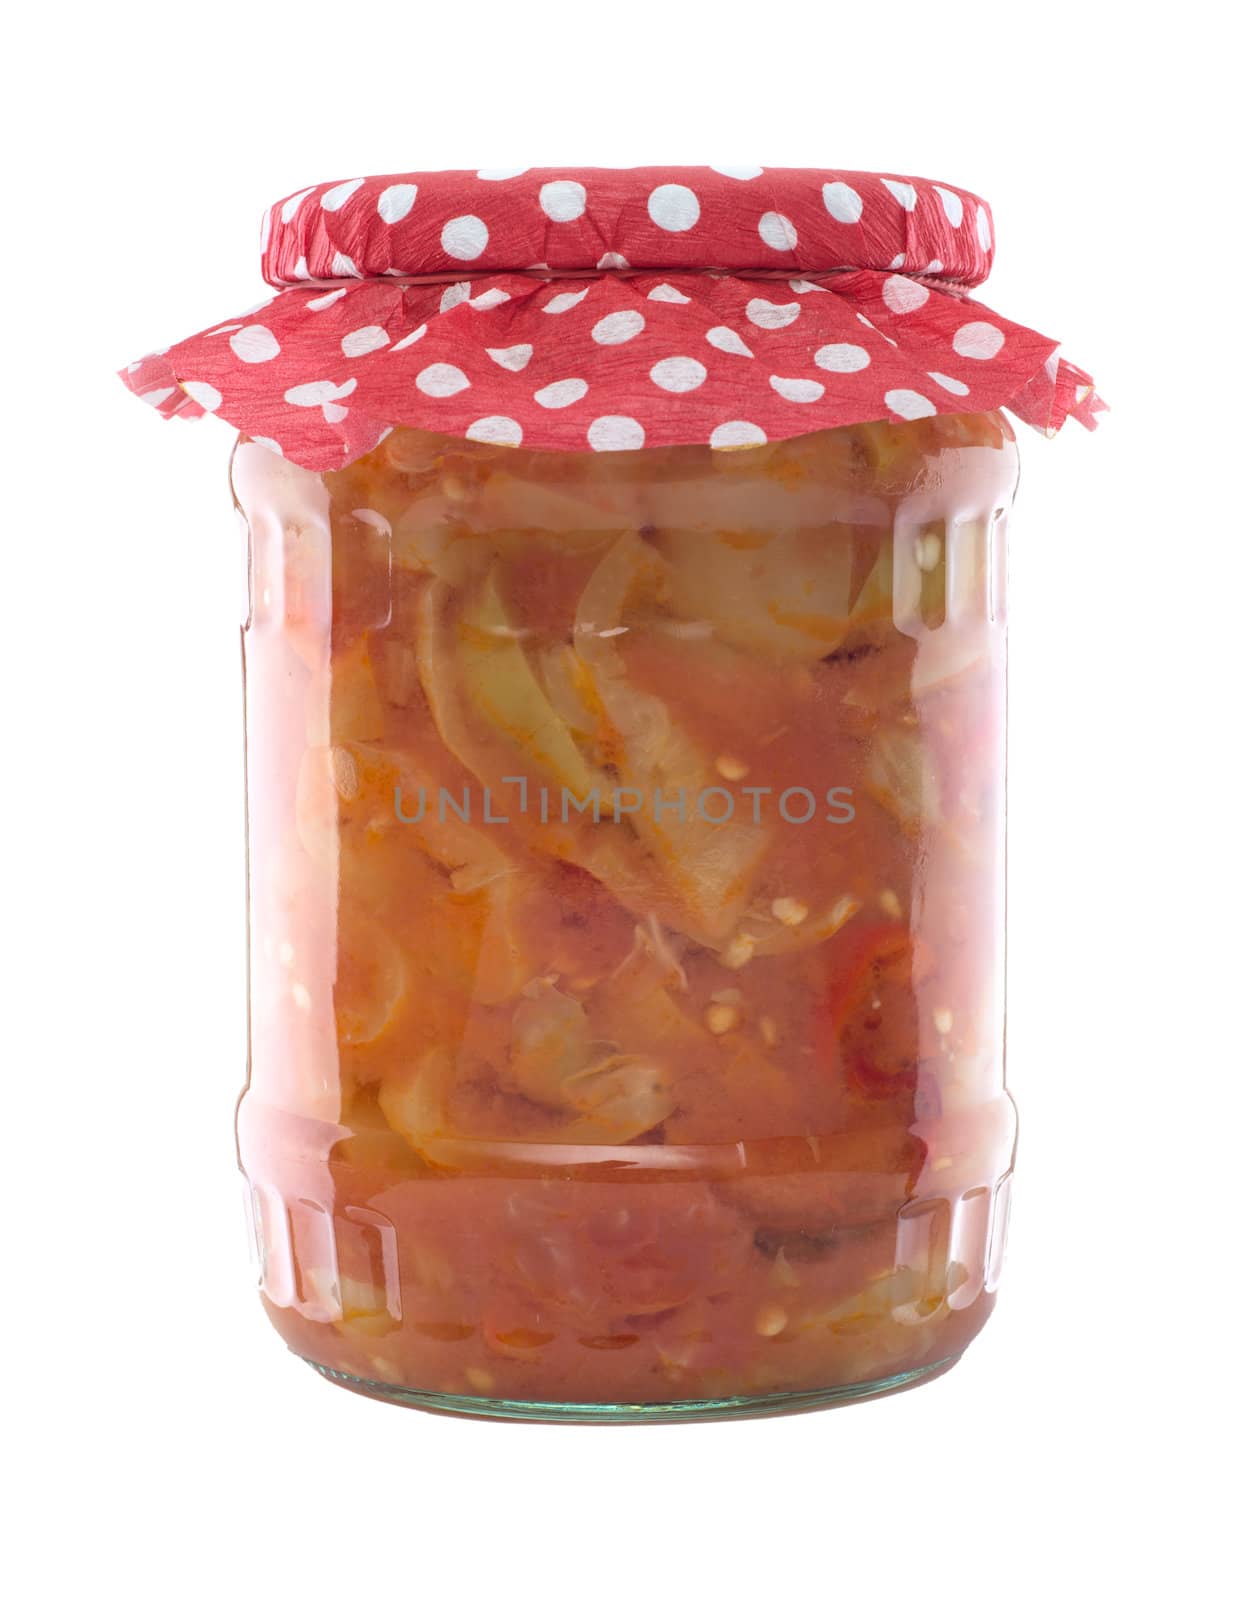 Jar of Canned Vegetables by Rainman